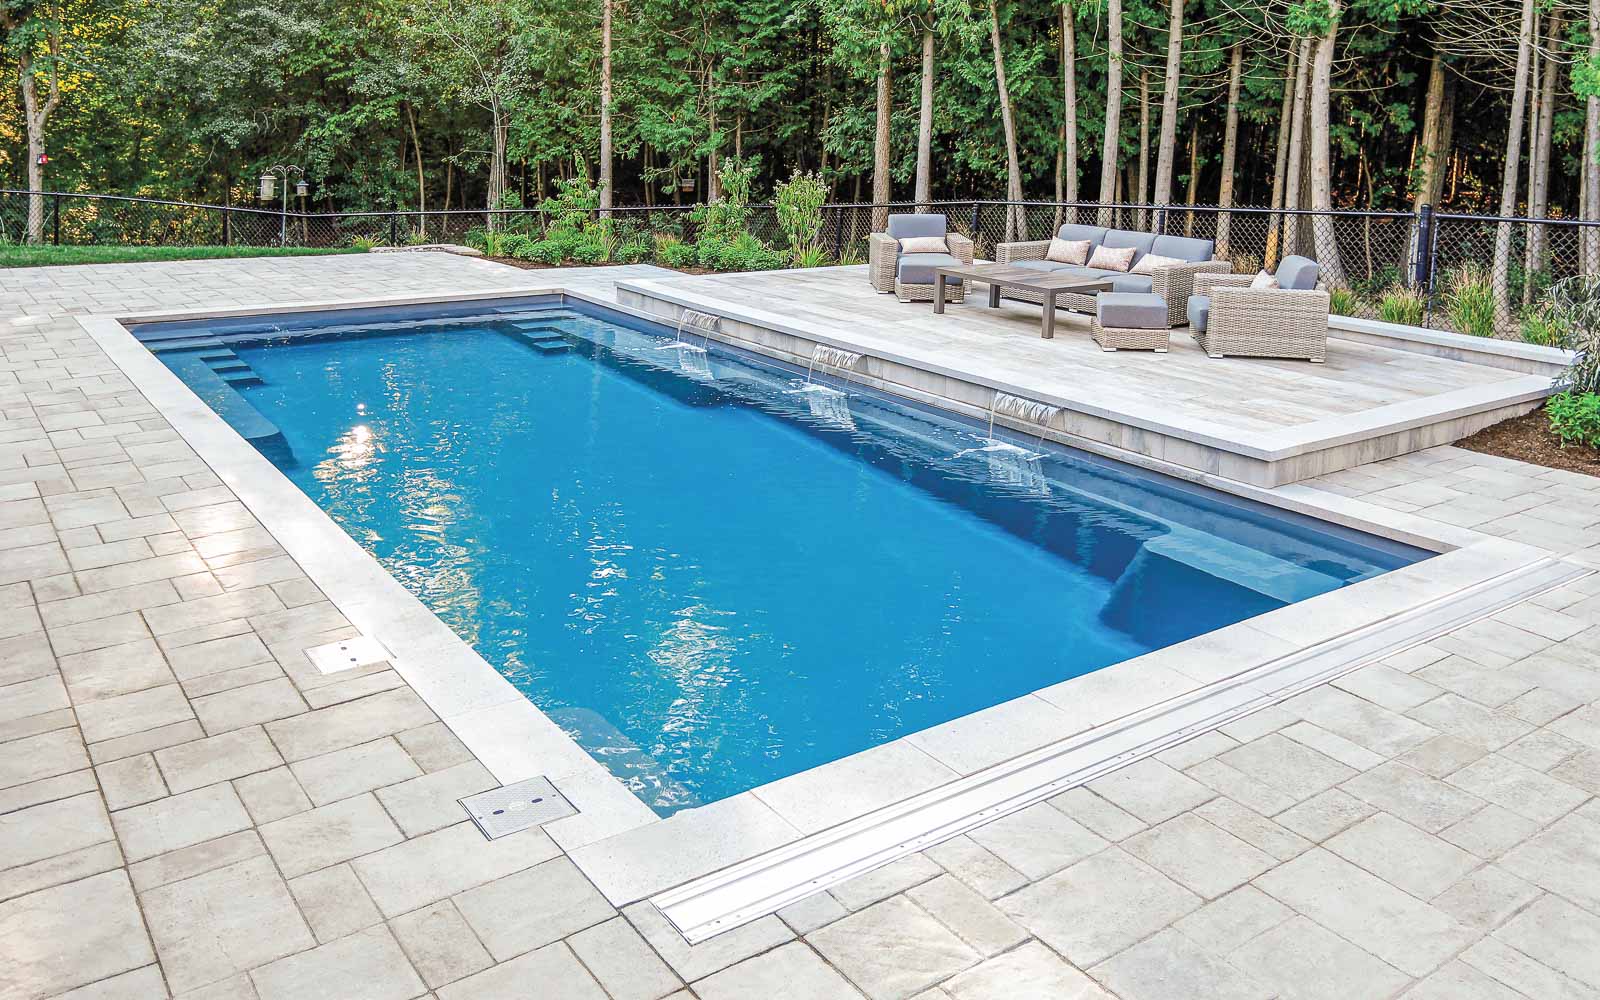 The Supreme, a fiberglass pool by Leisure Pools